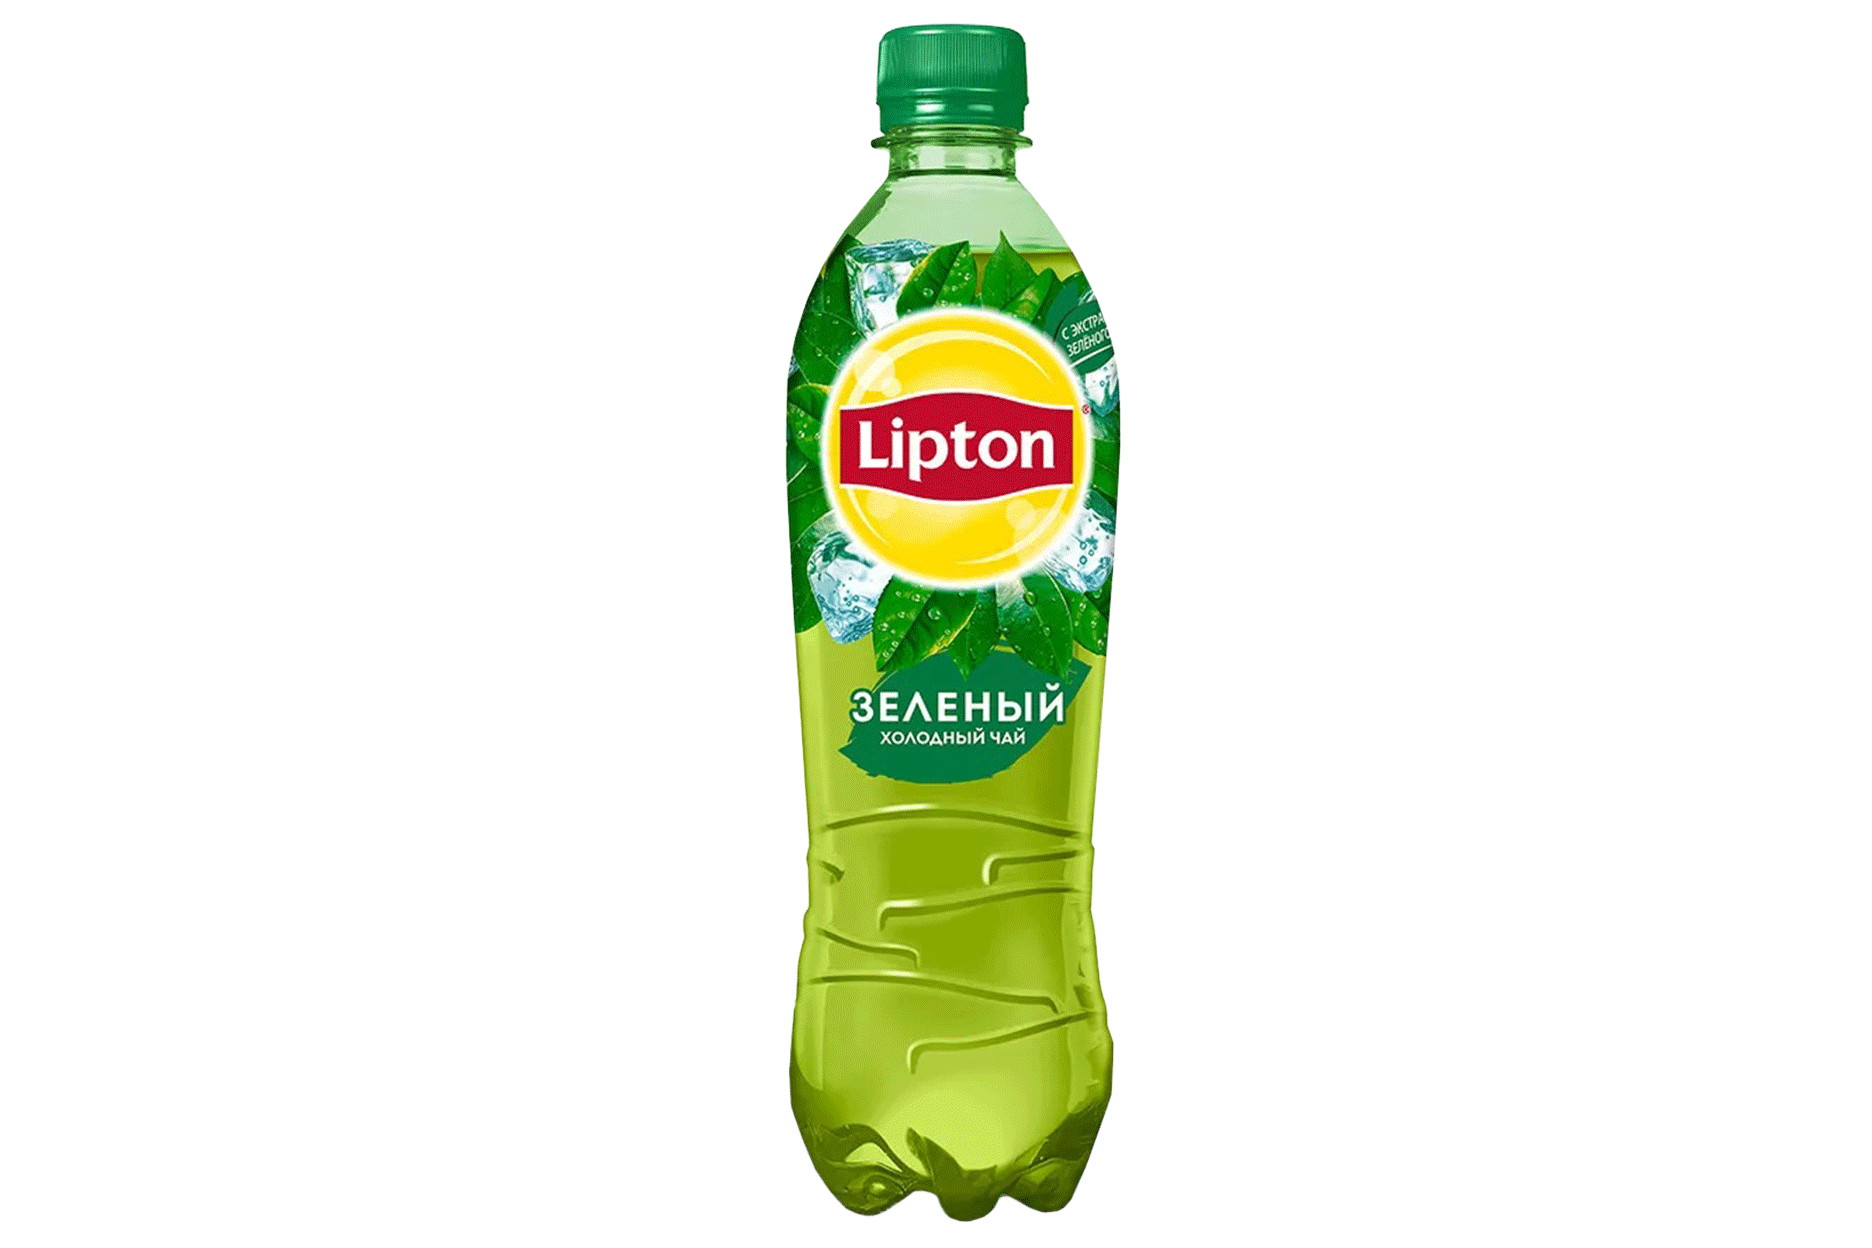 Бутылка зеленого липтона. Чай Липтон 0.5. Липтон зеленый чай 1.5. Липтон зеленый чай 1 литр. Липтон зеленый чай 0.5.